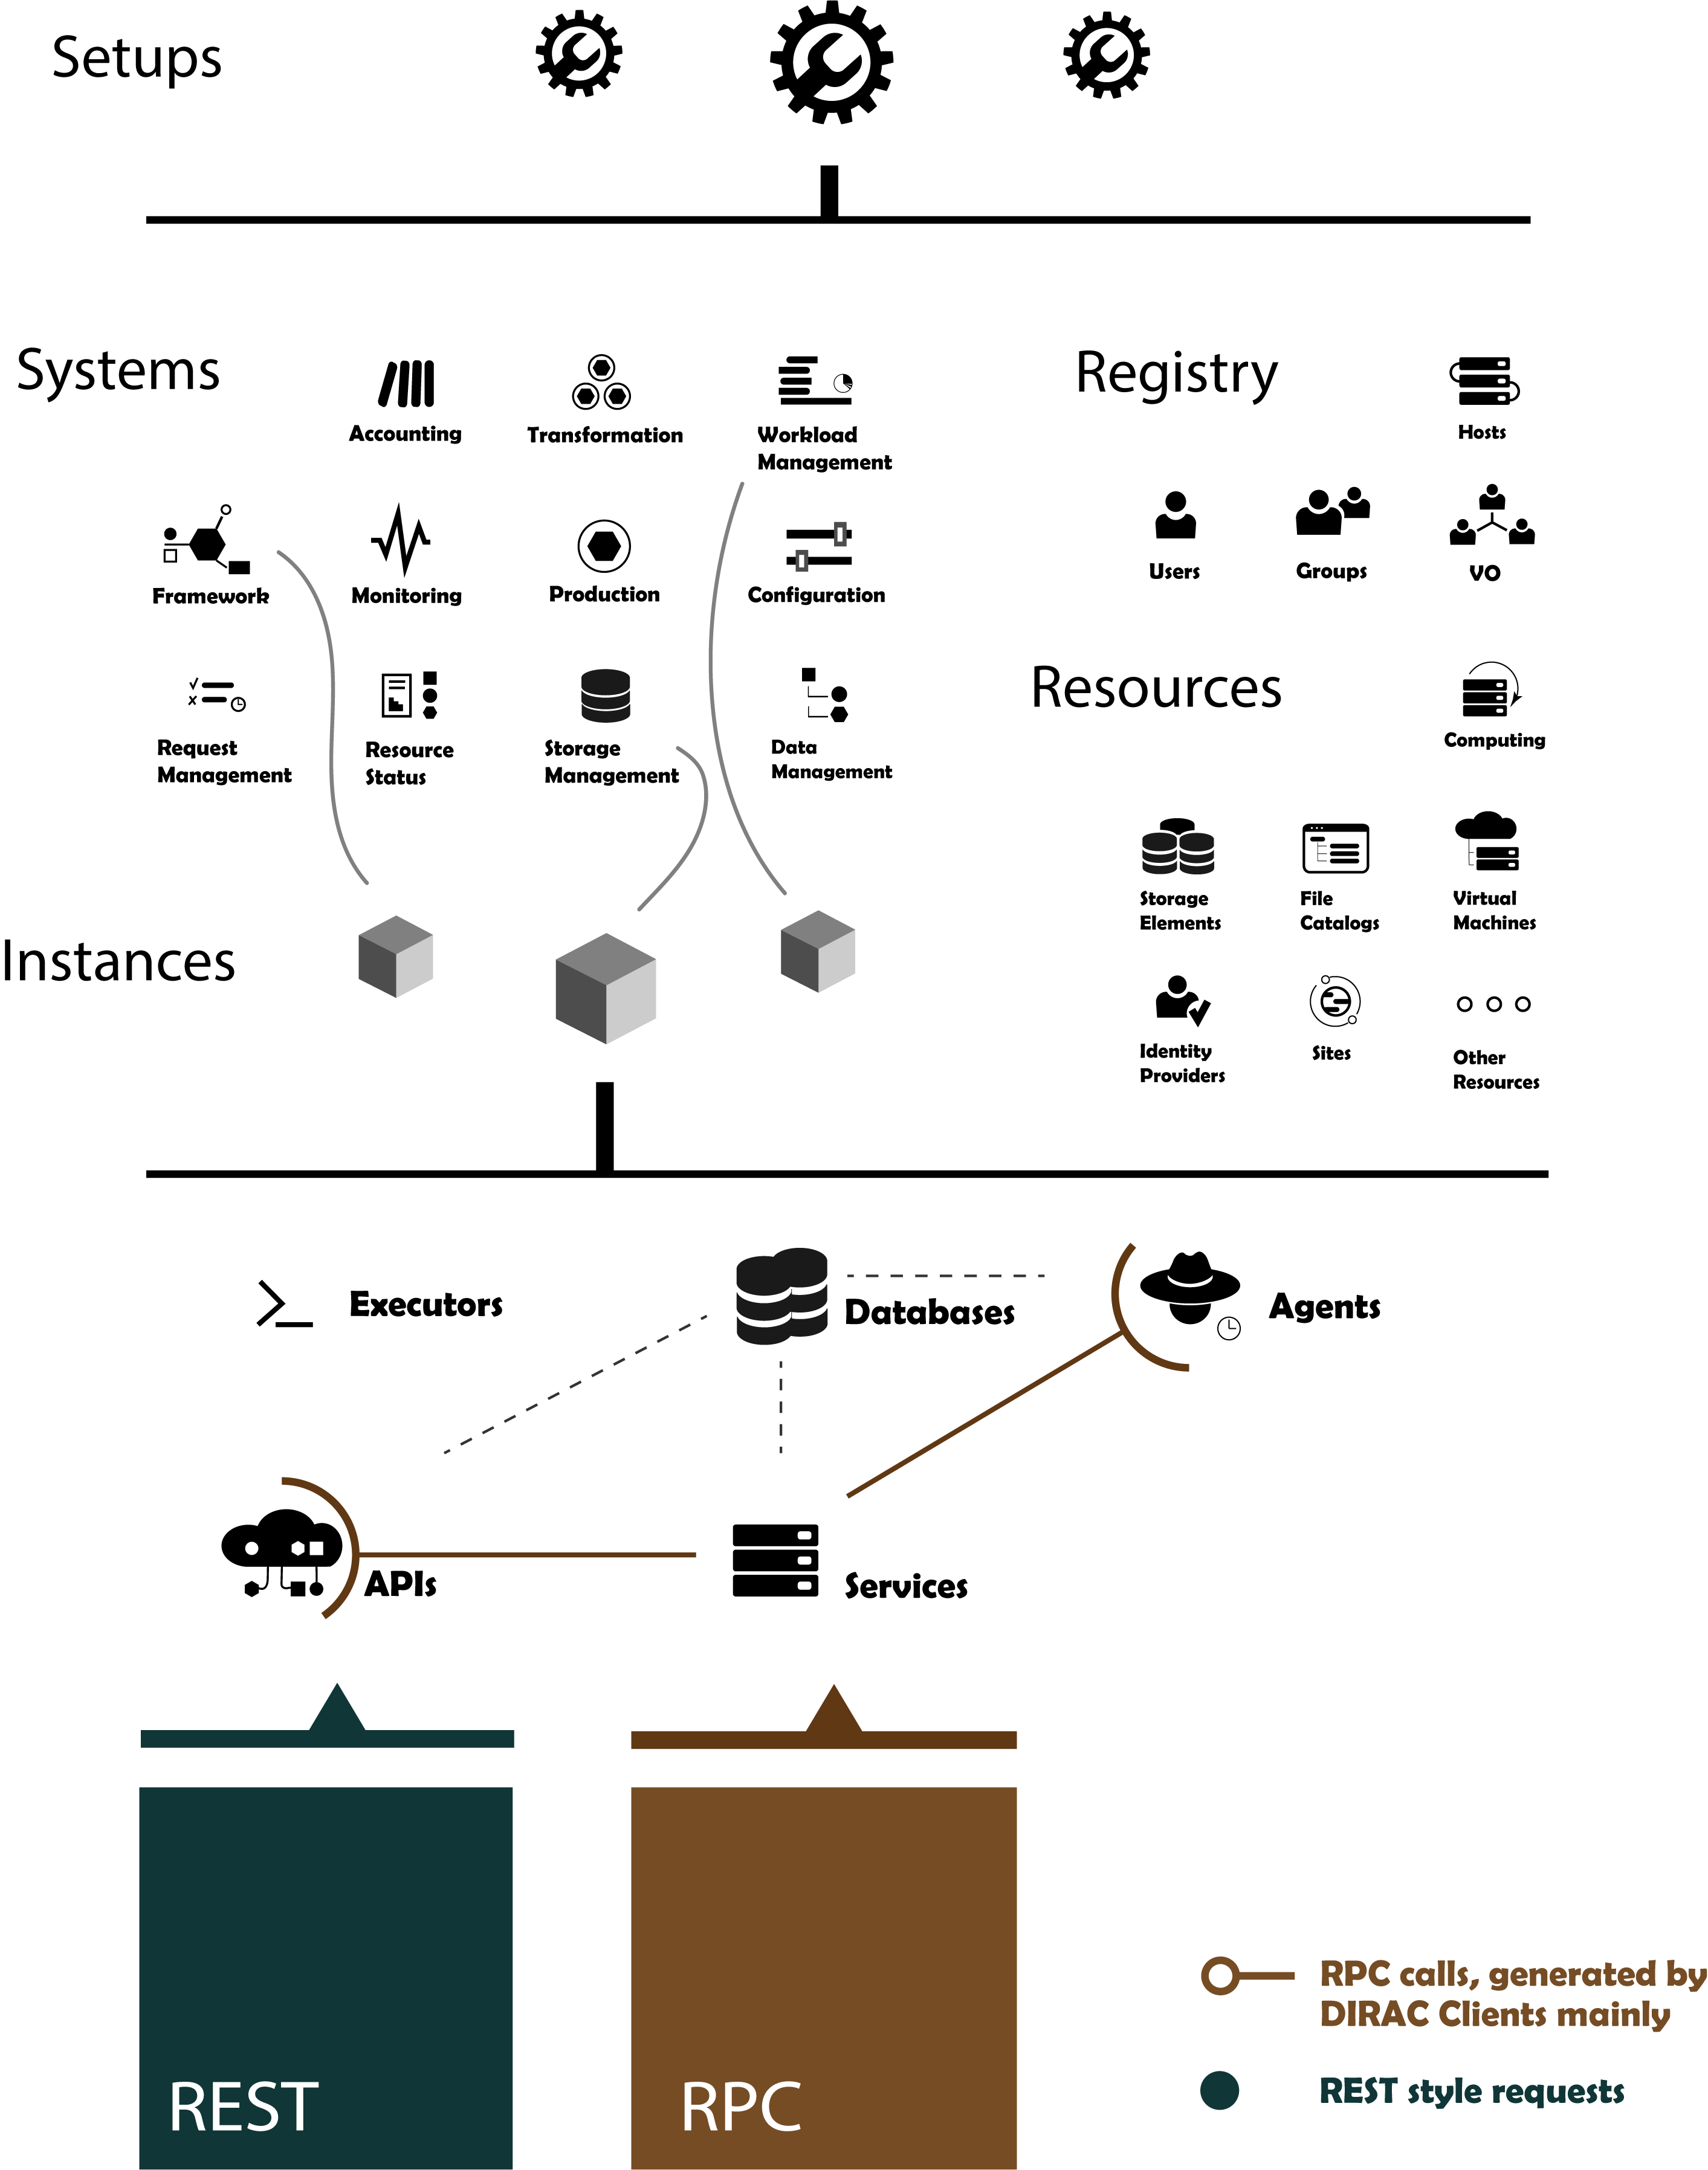 DIRAC setup structure illustration (source https://github.com/TaykYoku/DIRACIMGS/raw/main/DIRAC_Setup_structure.ai)